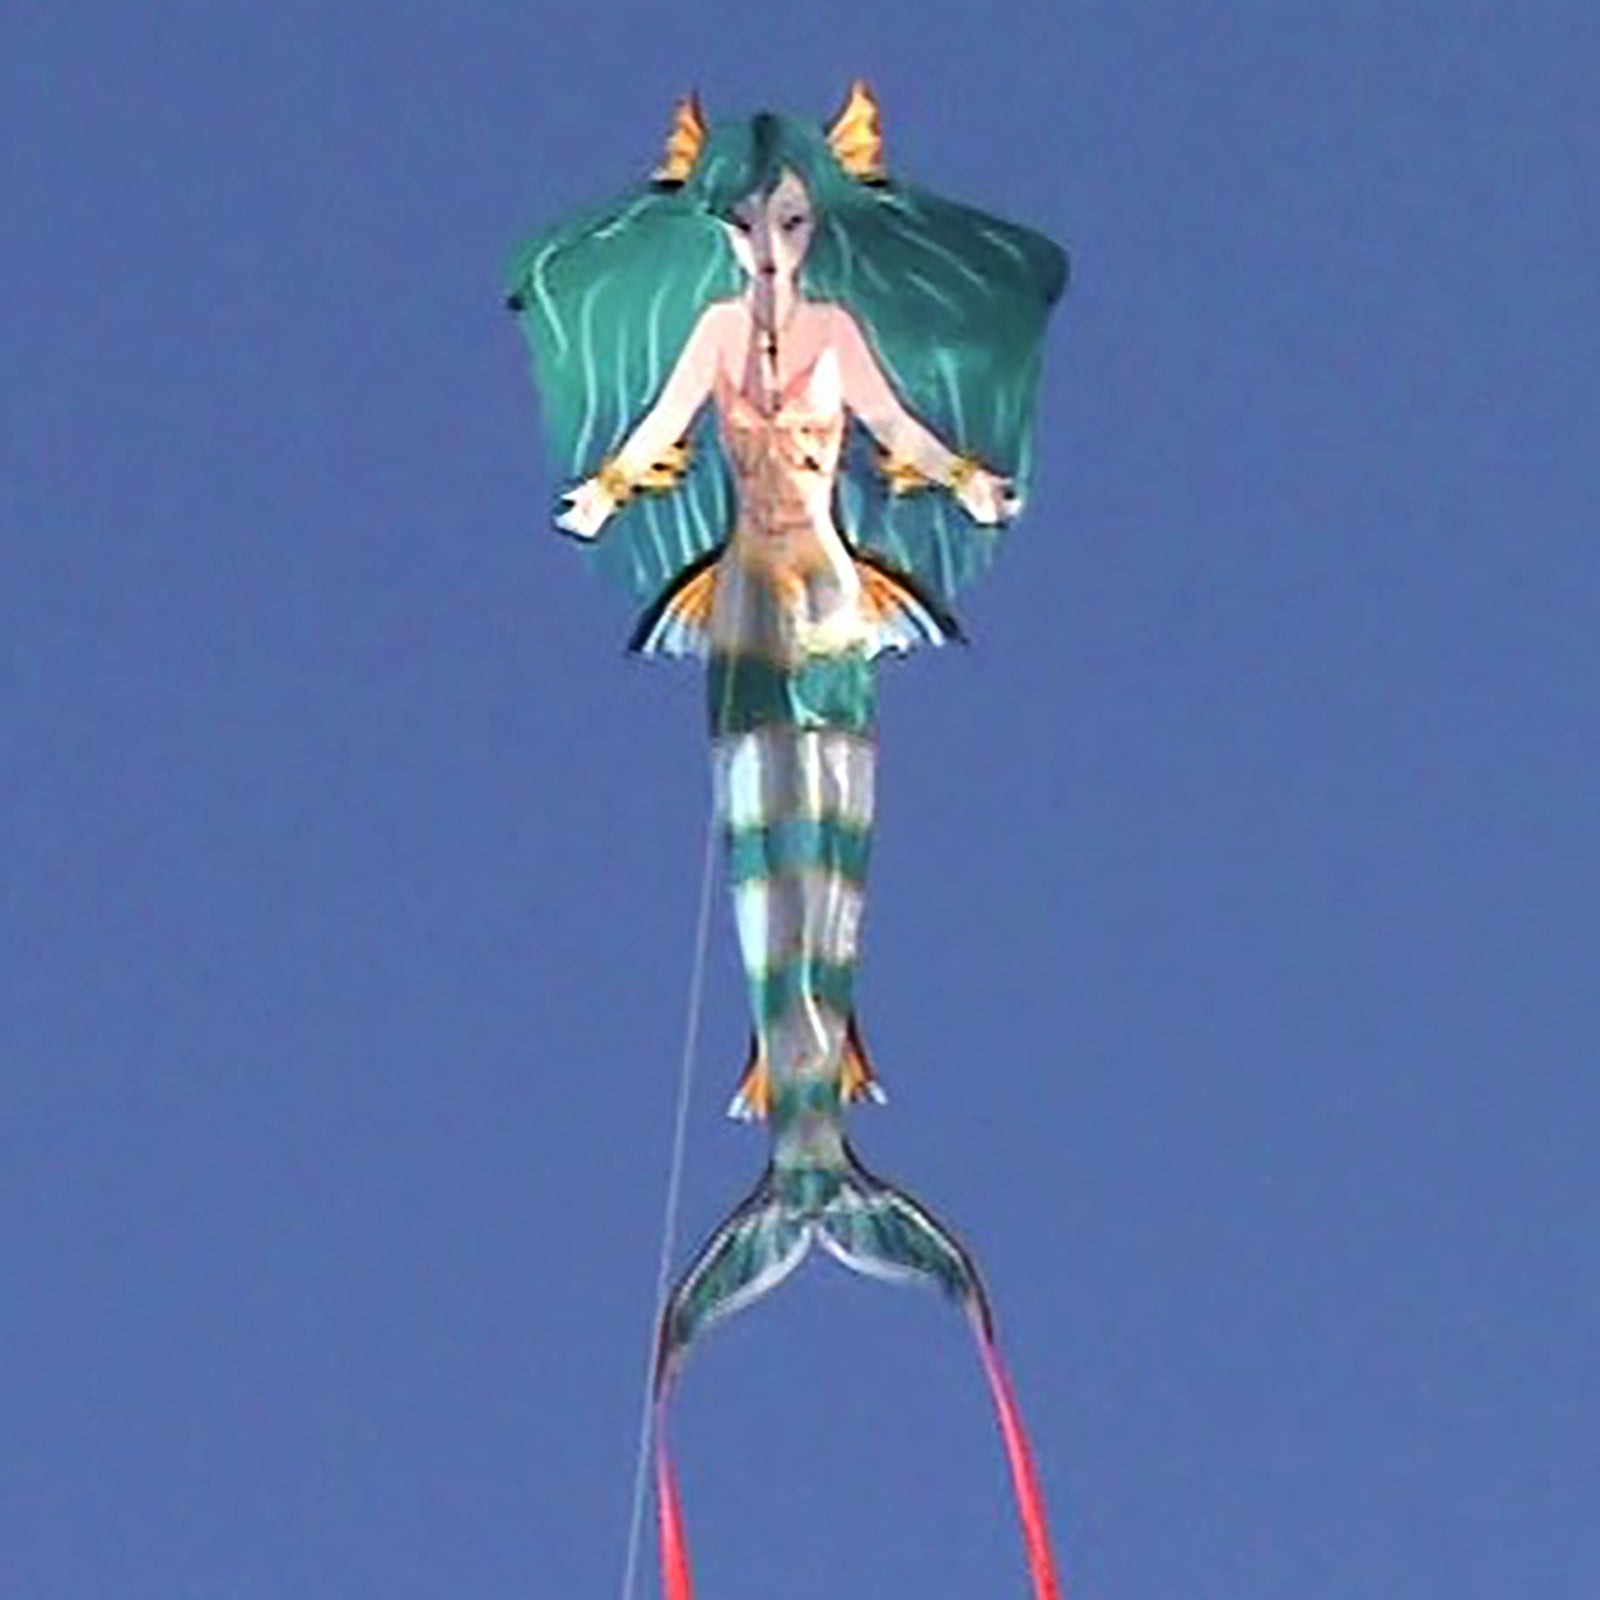 windnsun fantasyfliers mermaid nylon kite flying